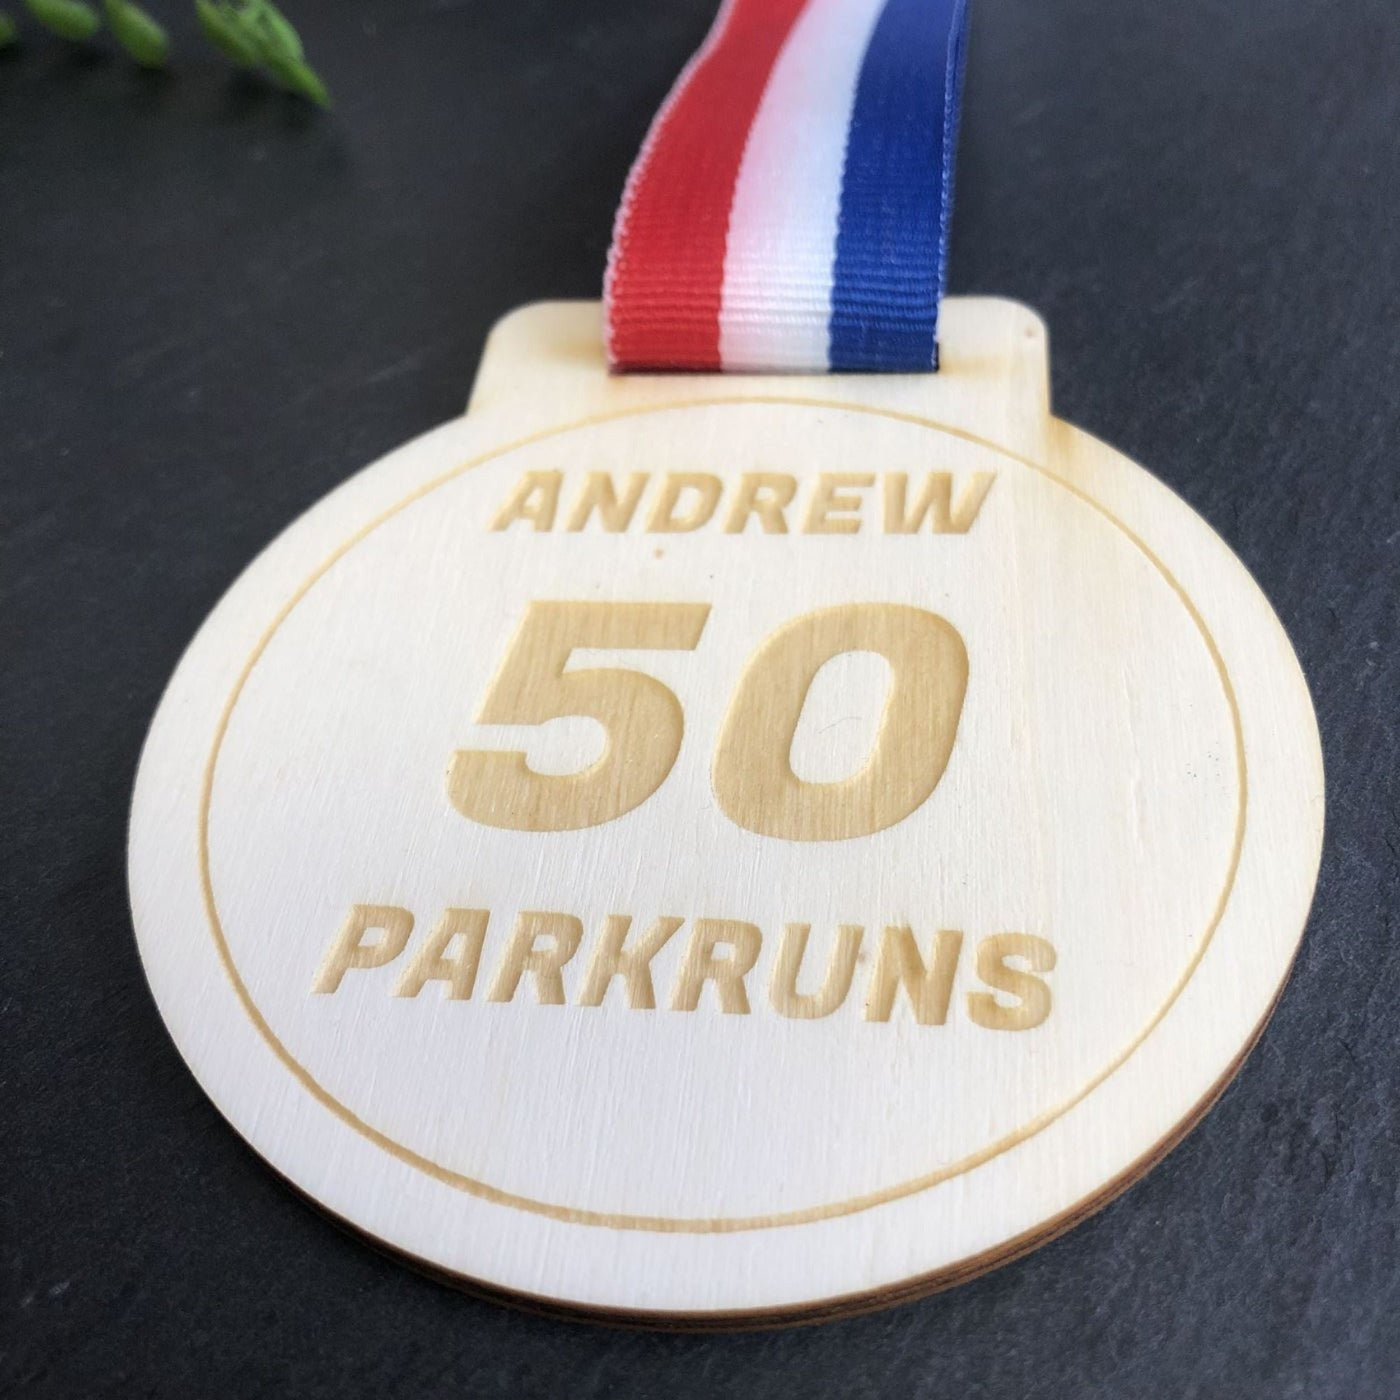 Personalised Parkruns Wooden Medal